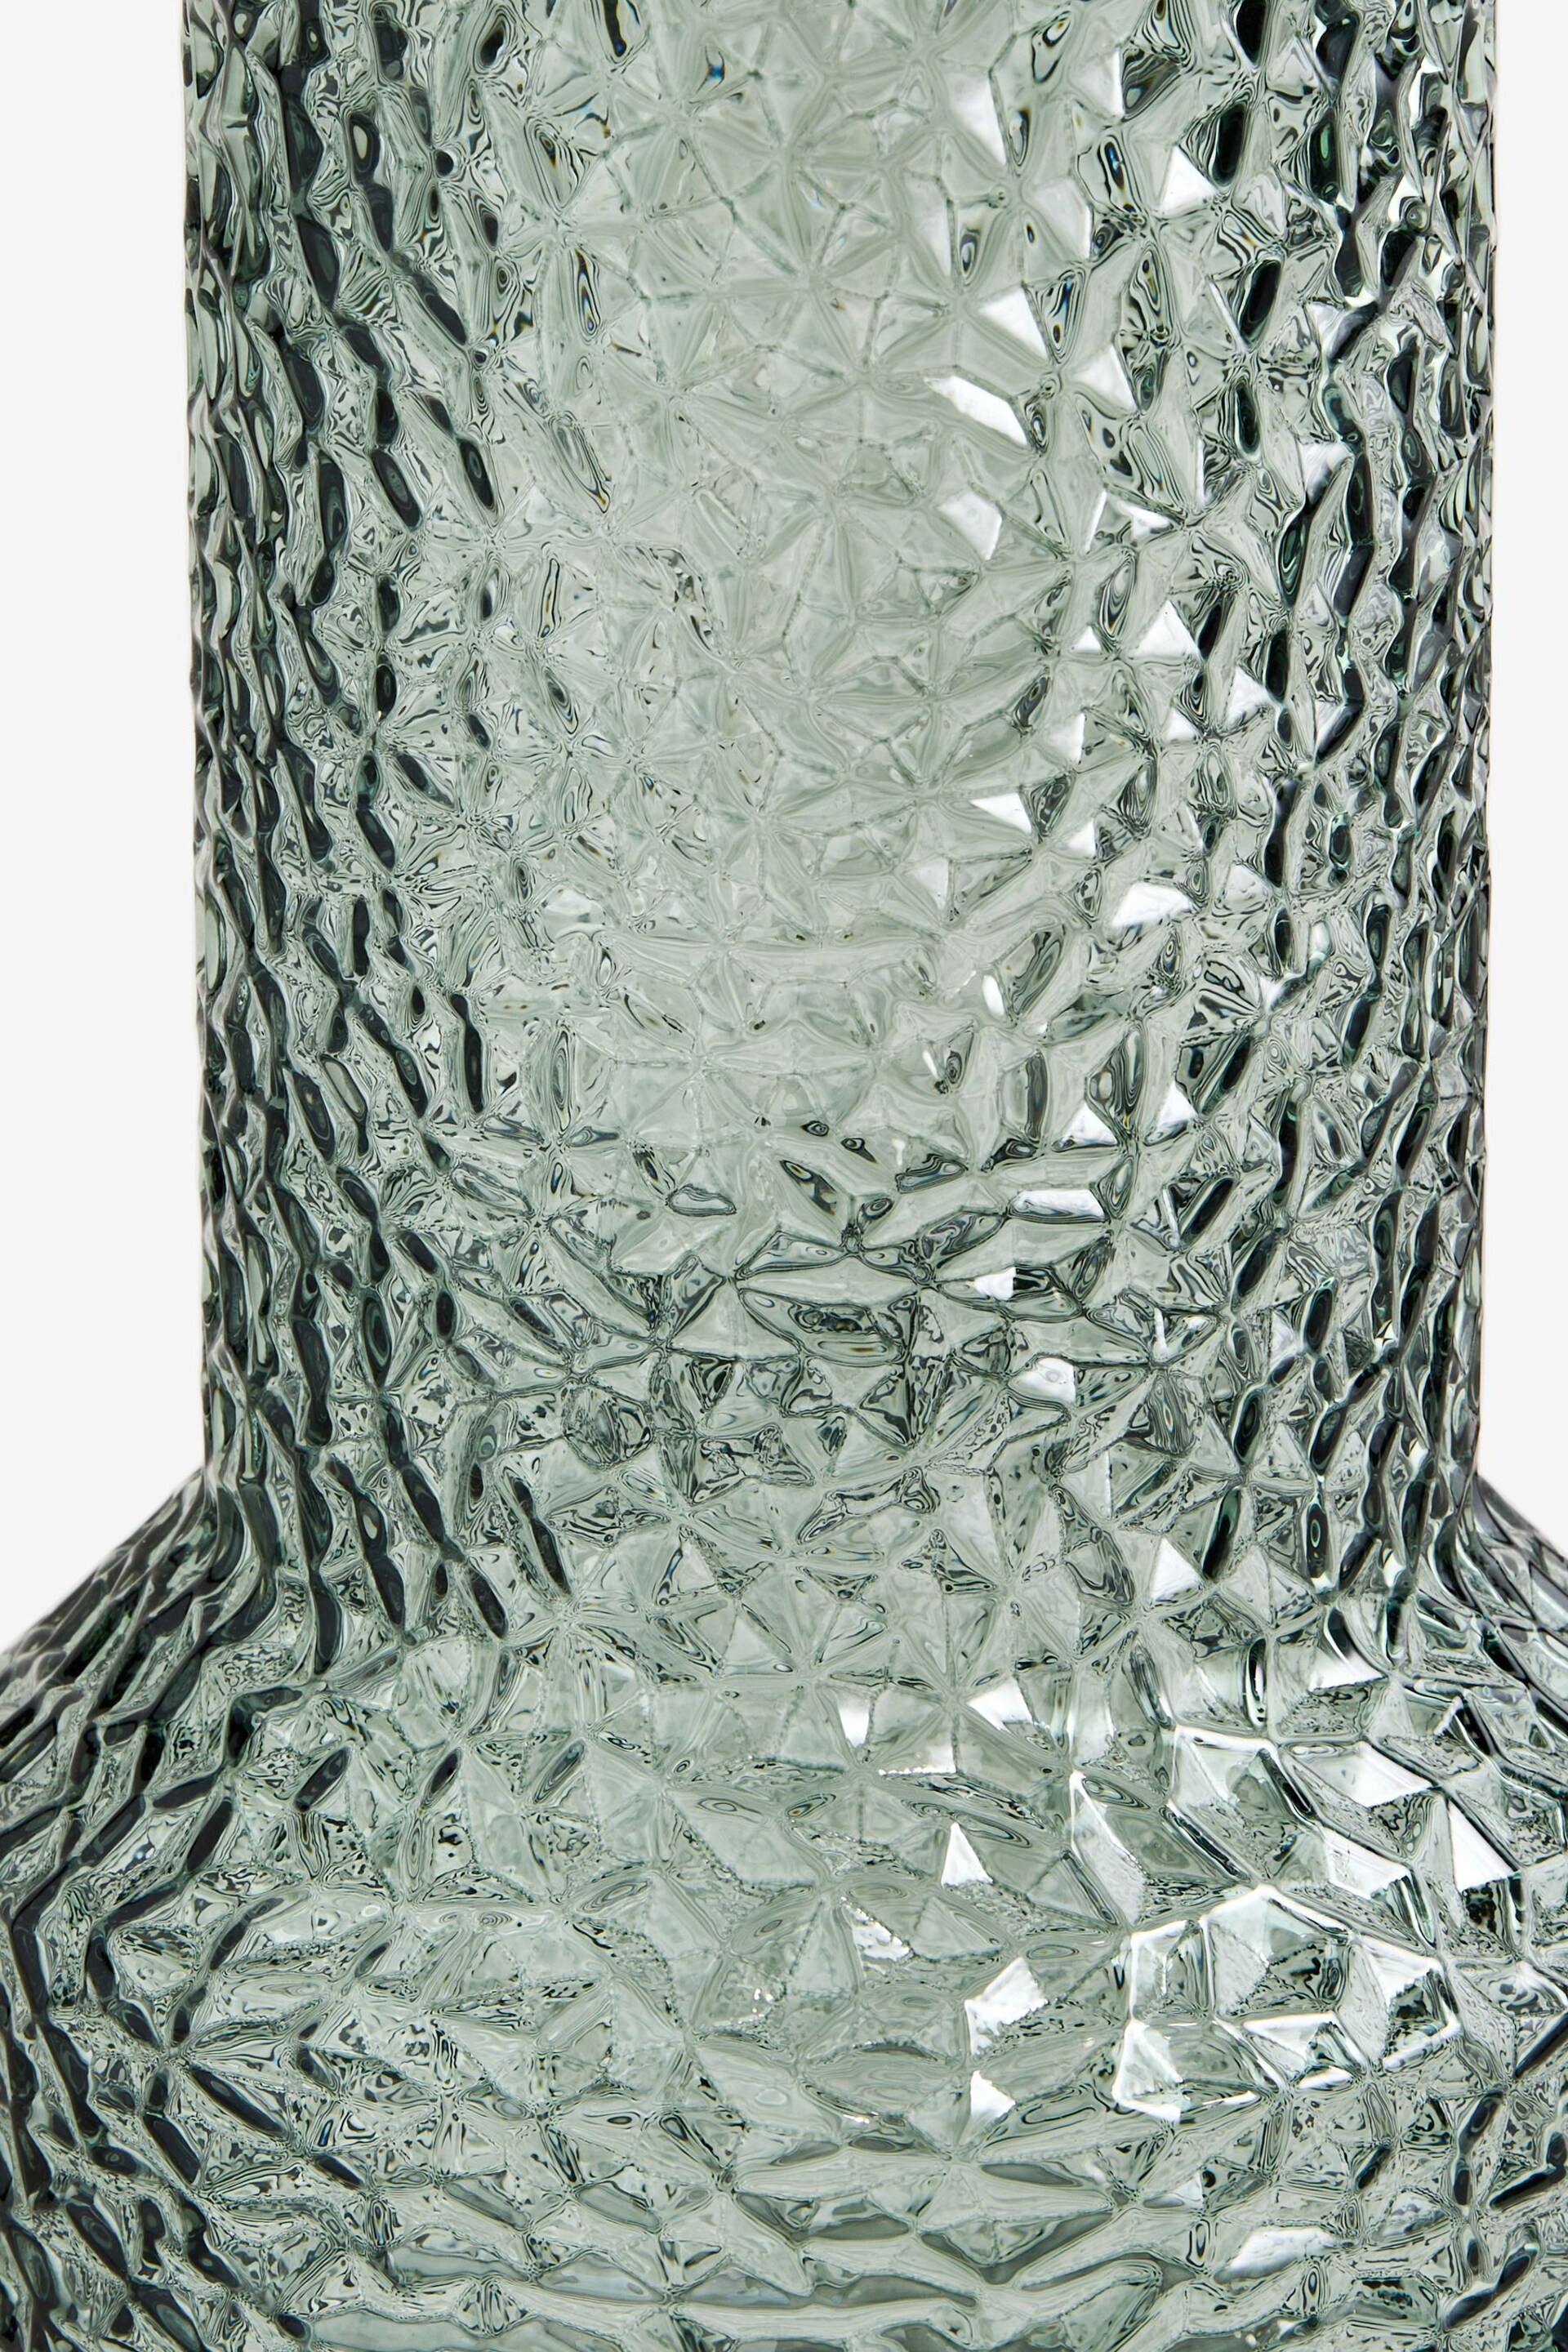 Green Textured Glass Flower Vase - Image 2 of 5